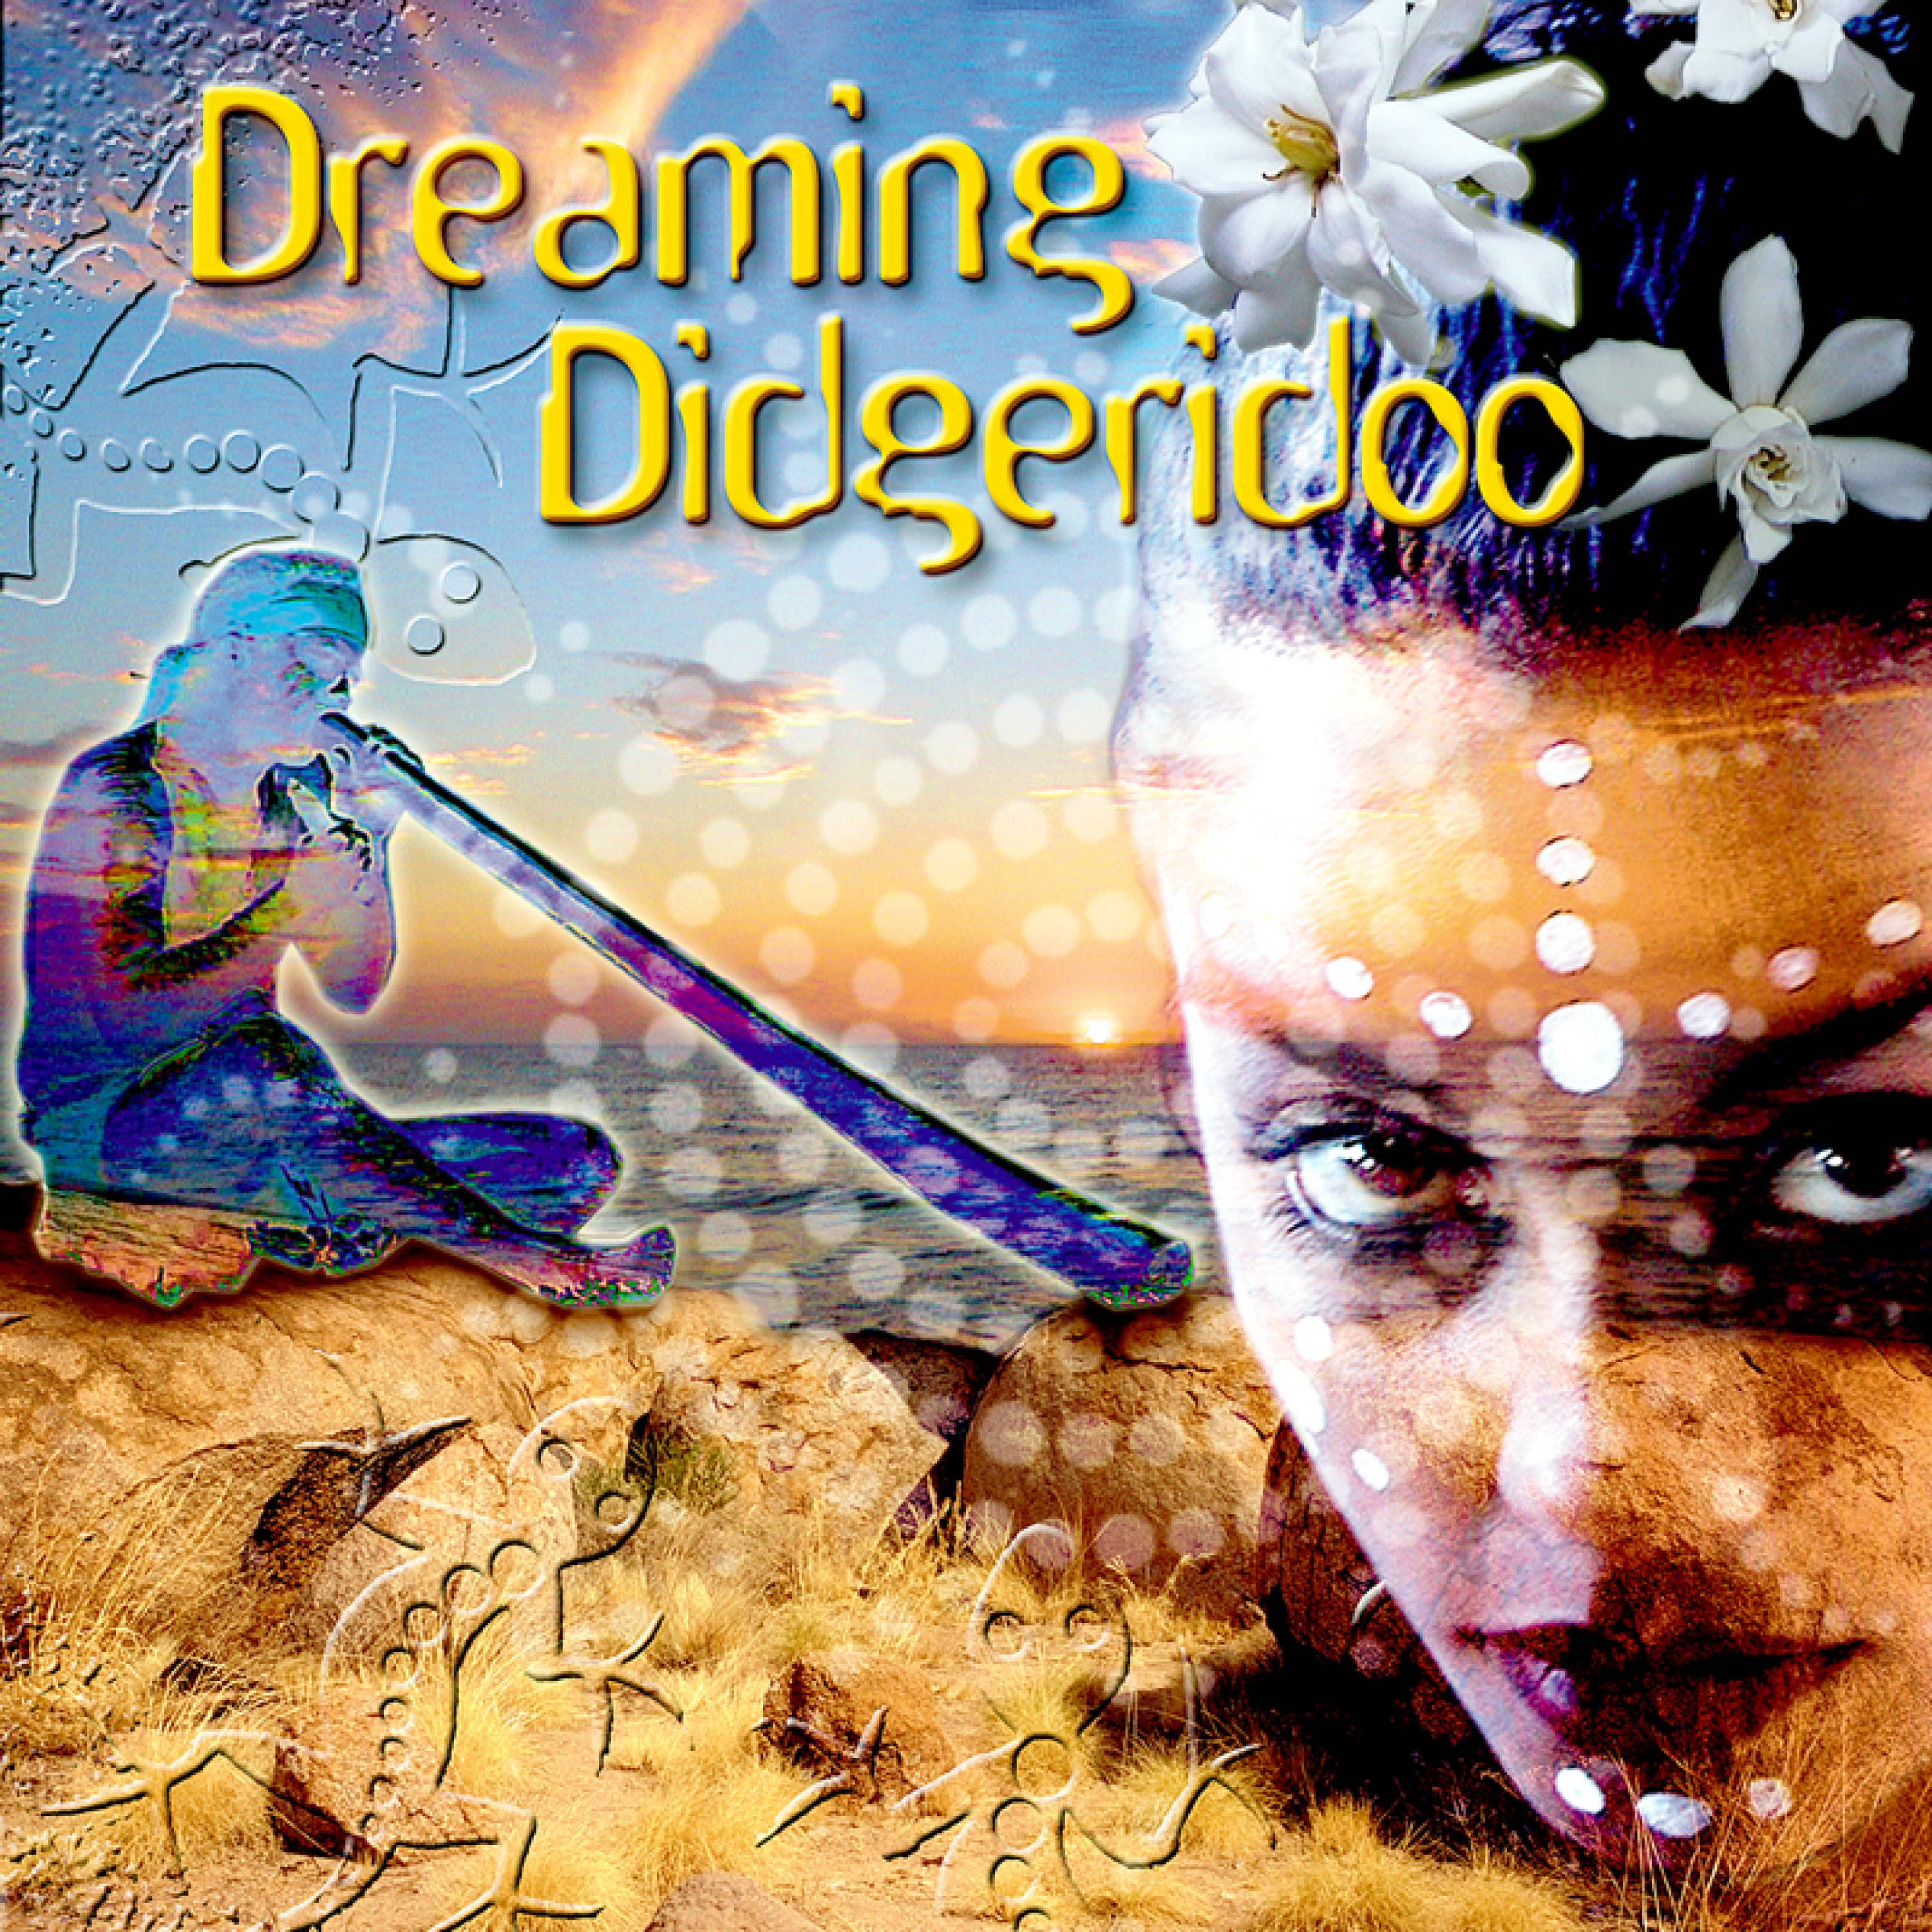 Dreamwalker Didge (Music Mosaic remastered)